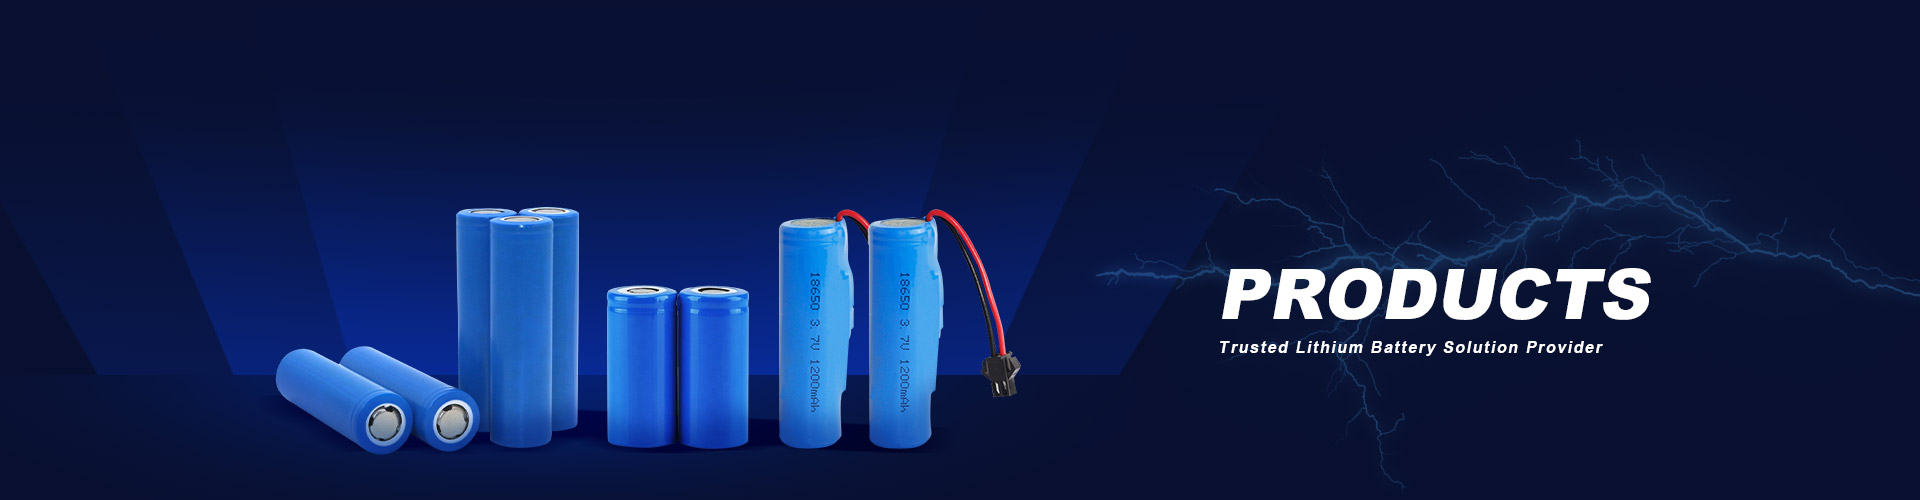 Digital lithium polymer battery